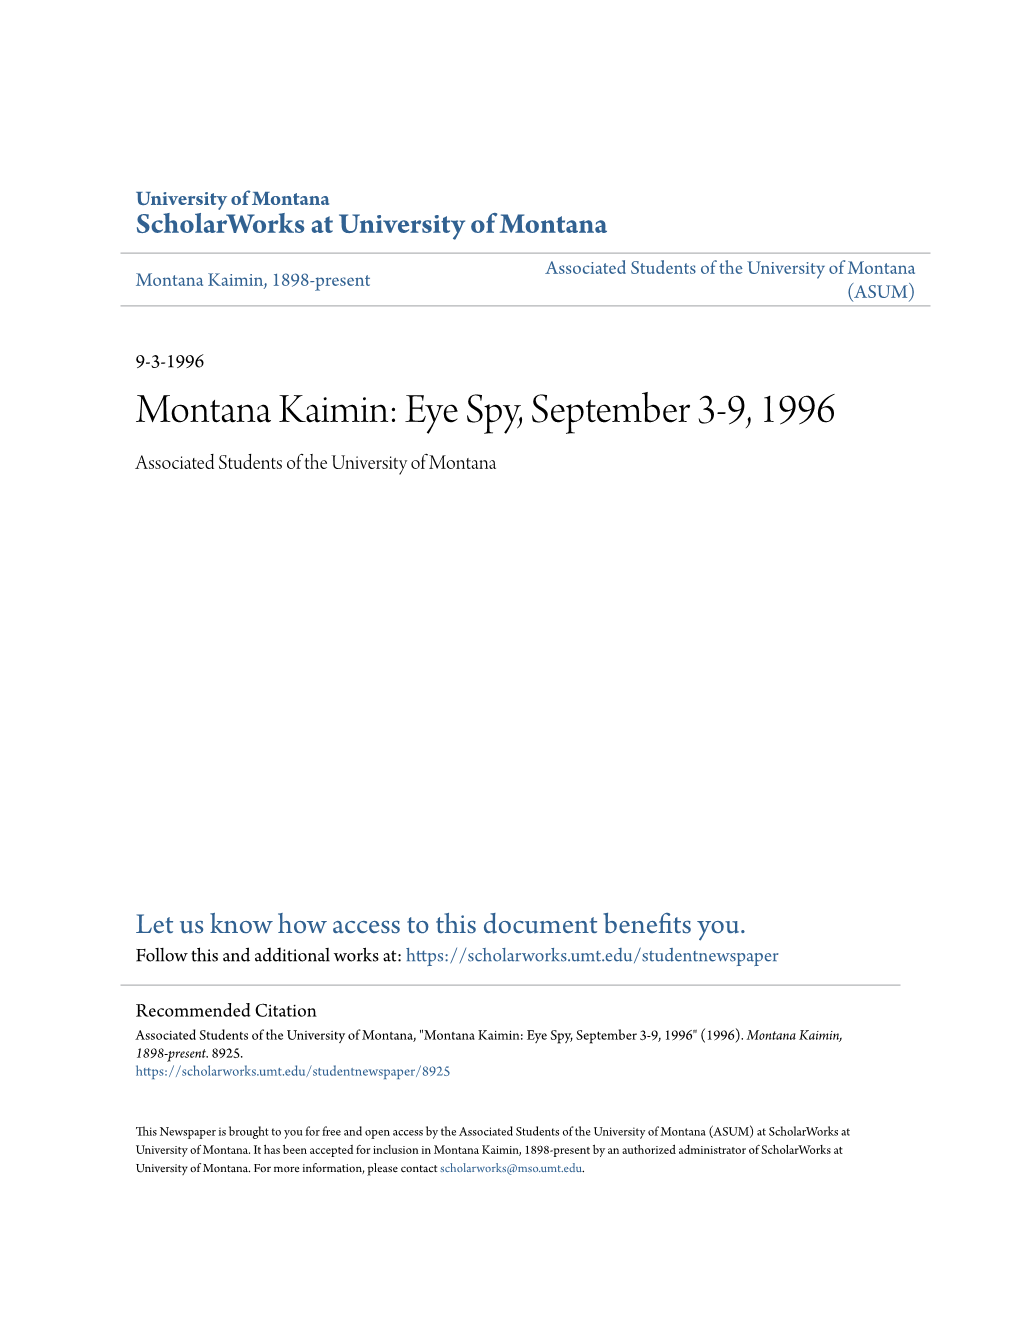 Montana Kaimin: Eye Spy, September 3-9, 1996 Associated Students of the University of Montana